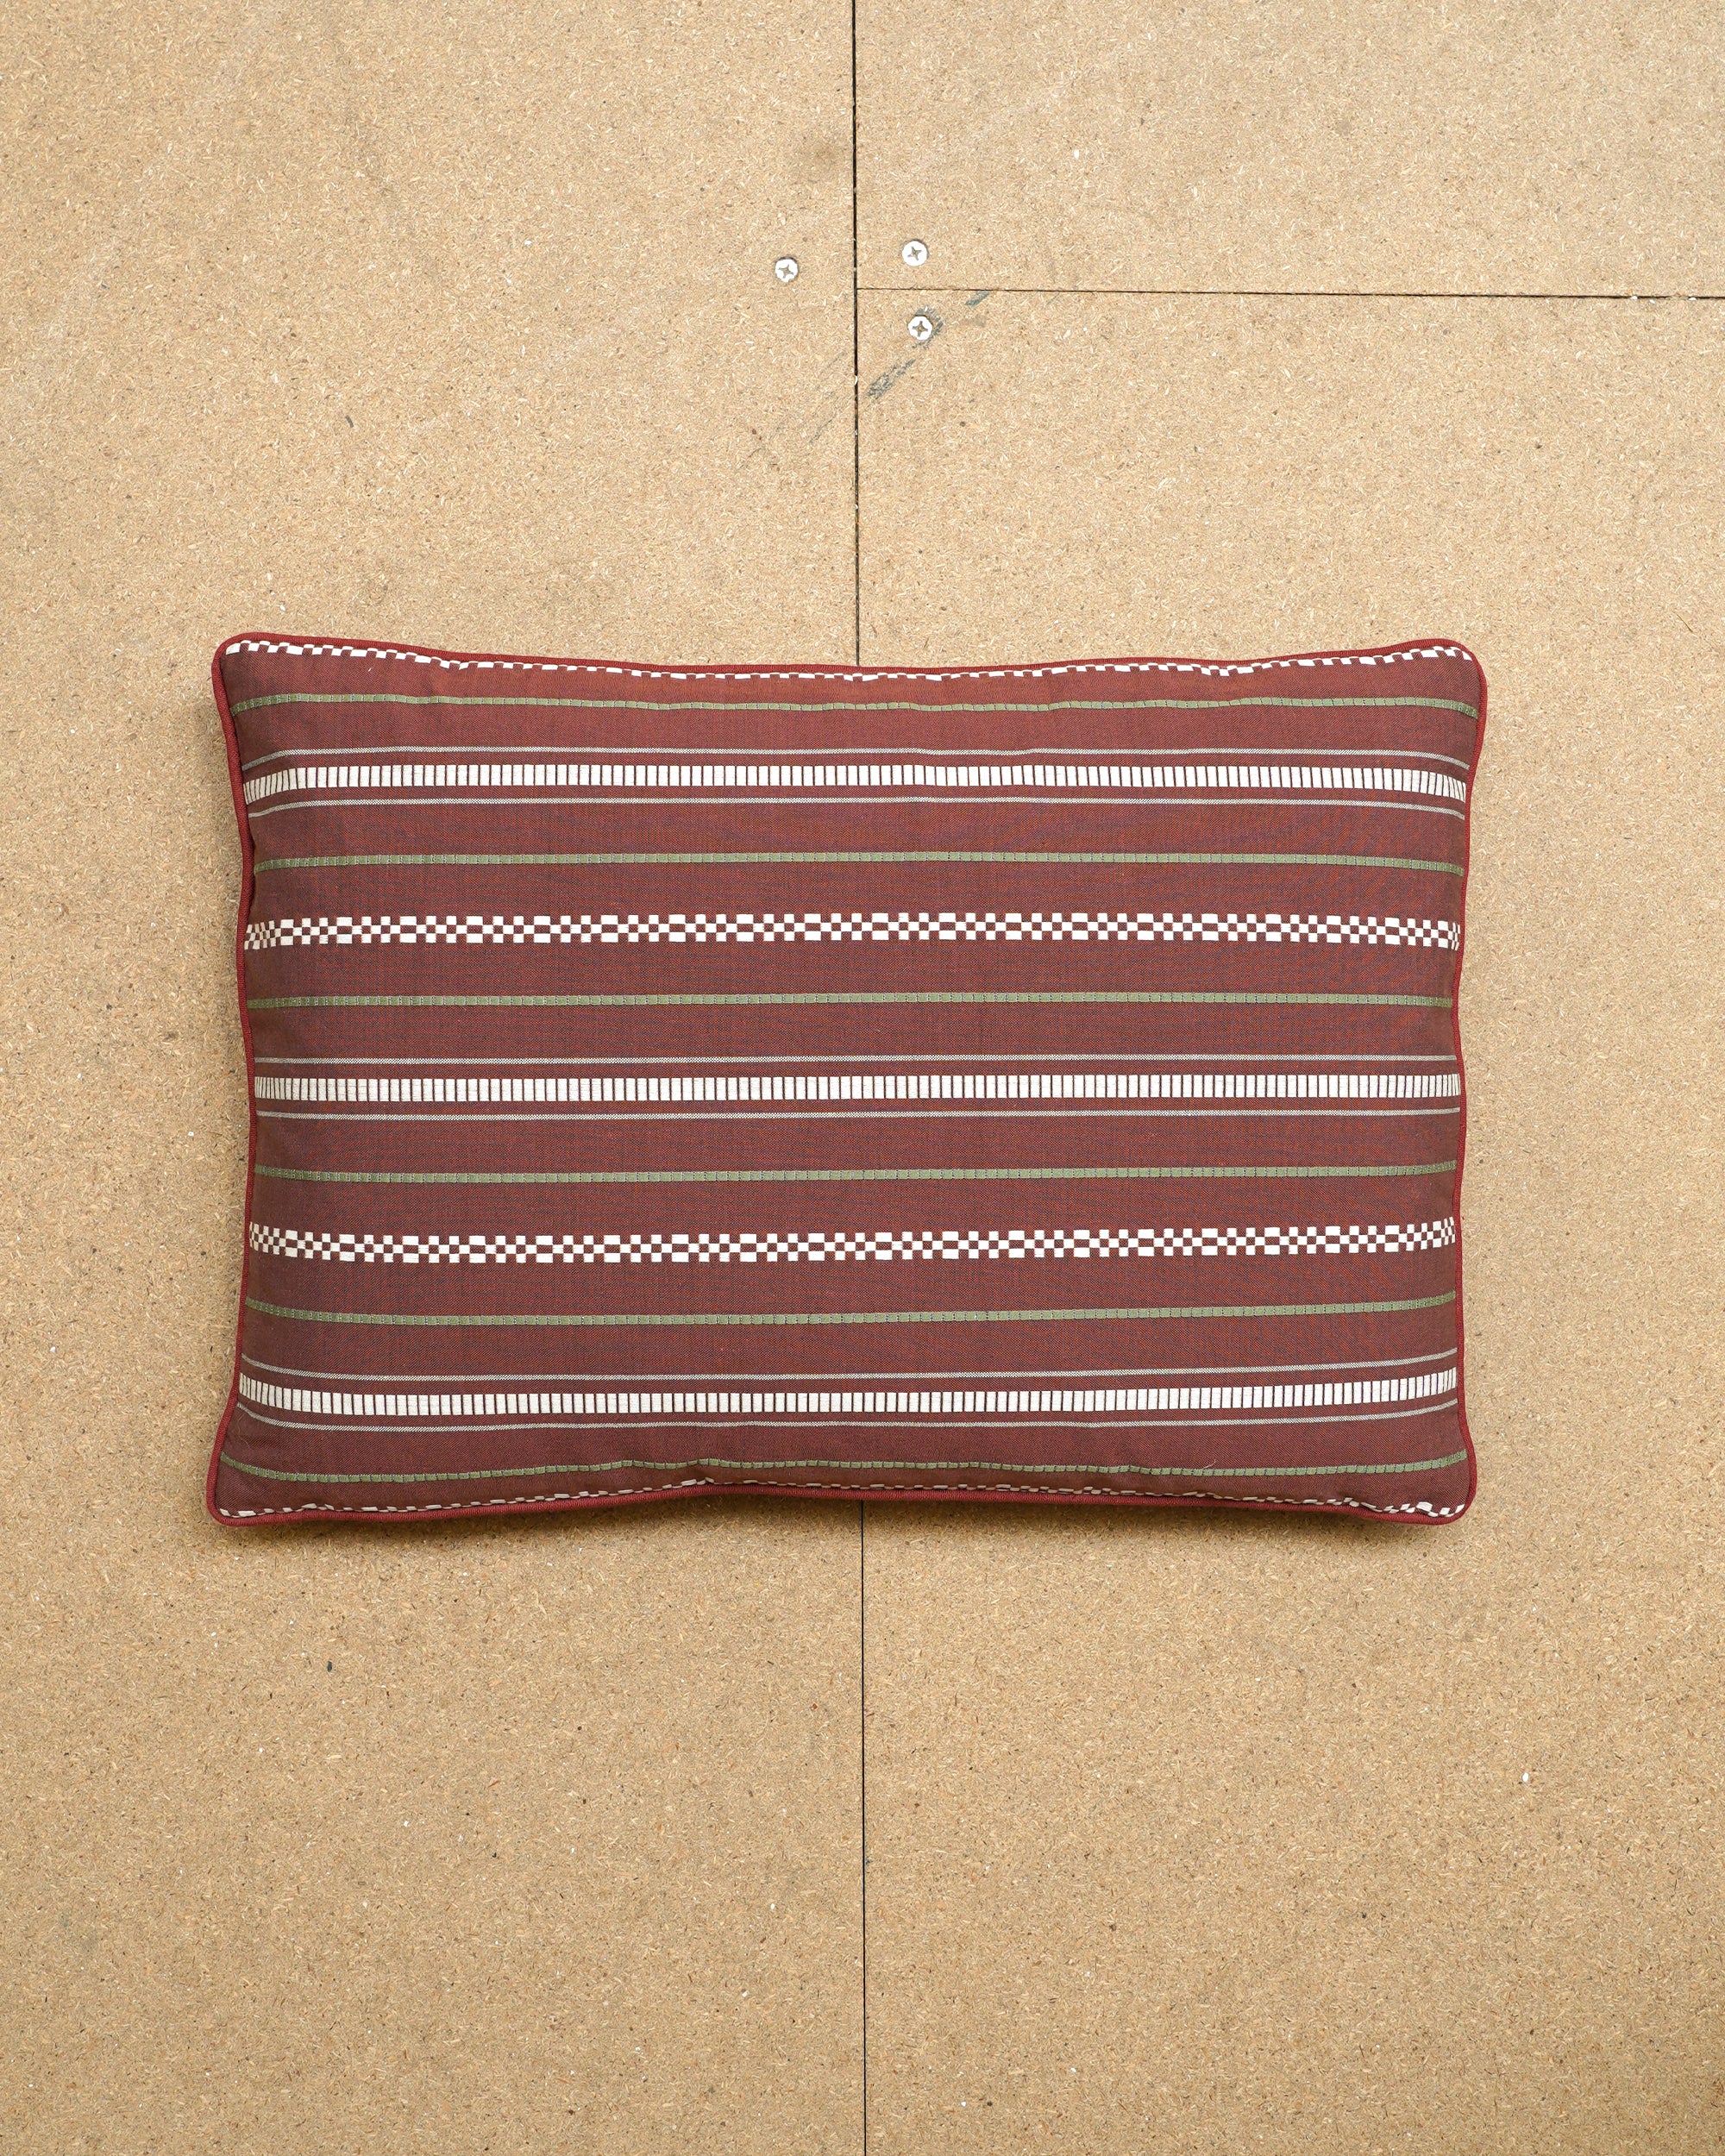 Woven Horizontal Stripe Rectangular Cushion - Russet Red